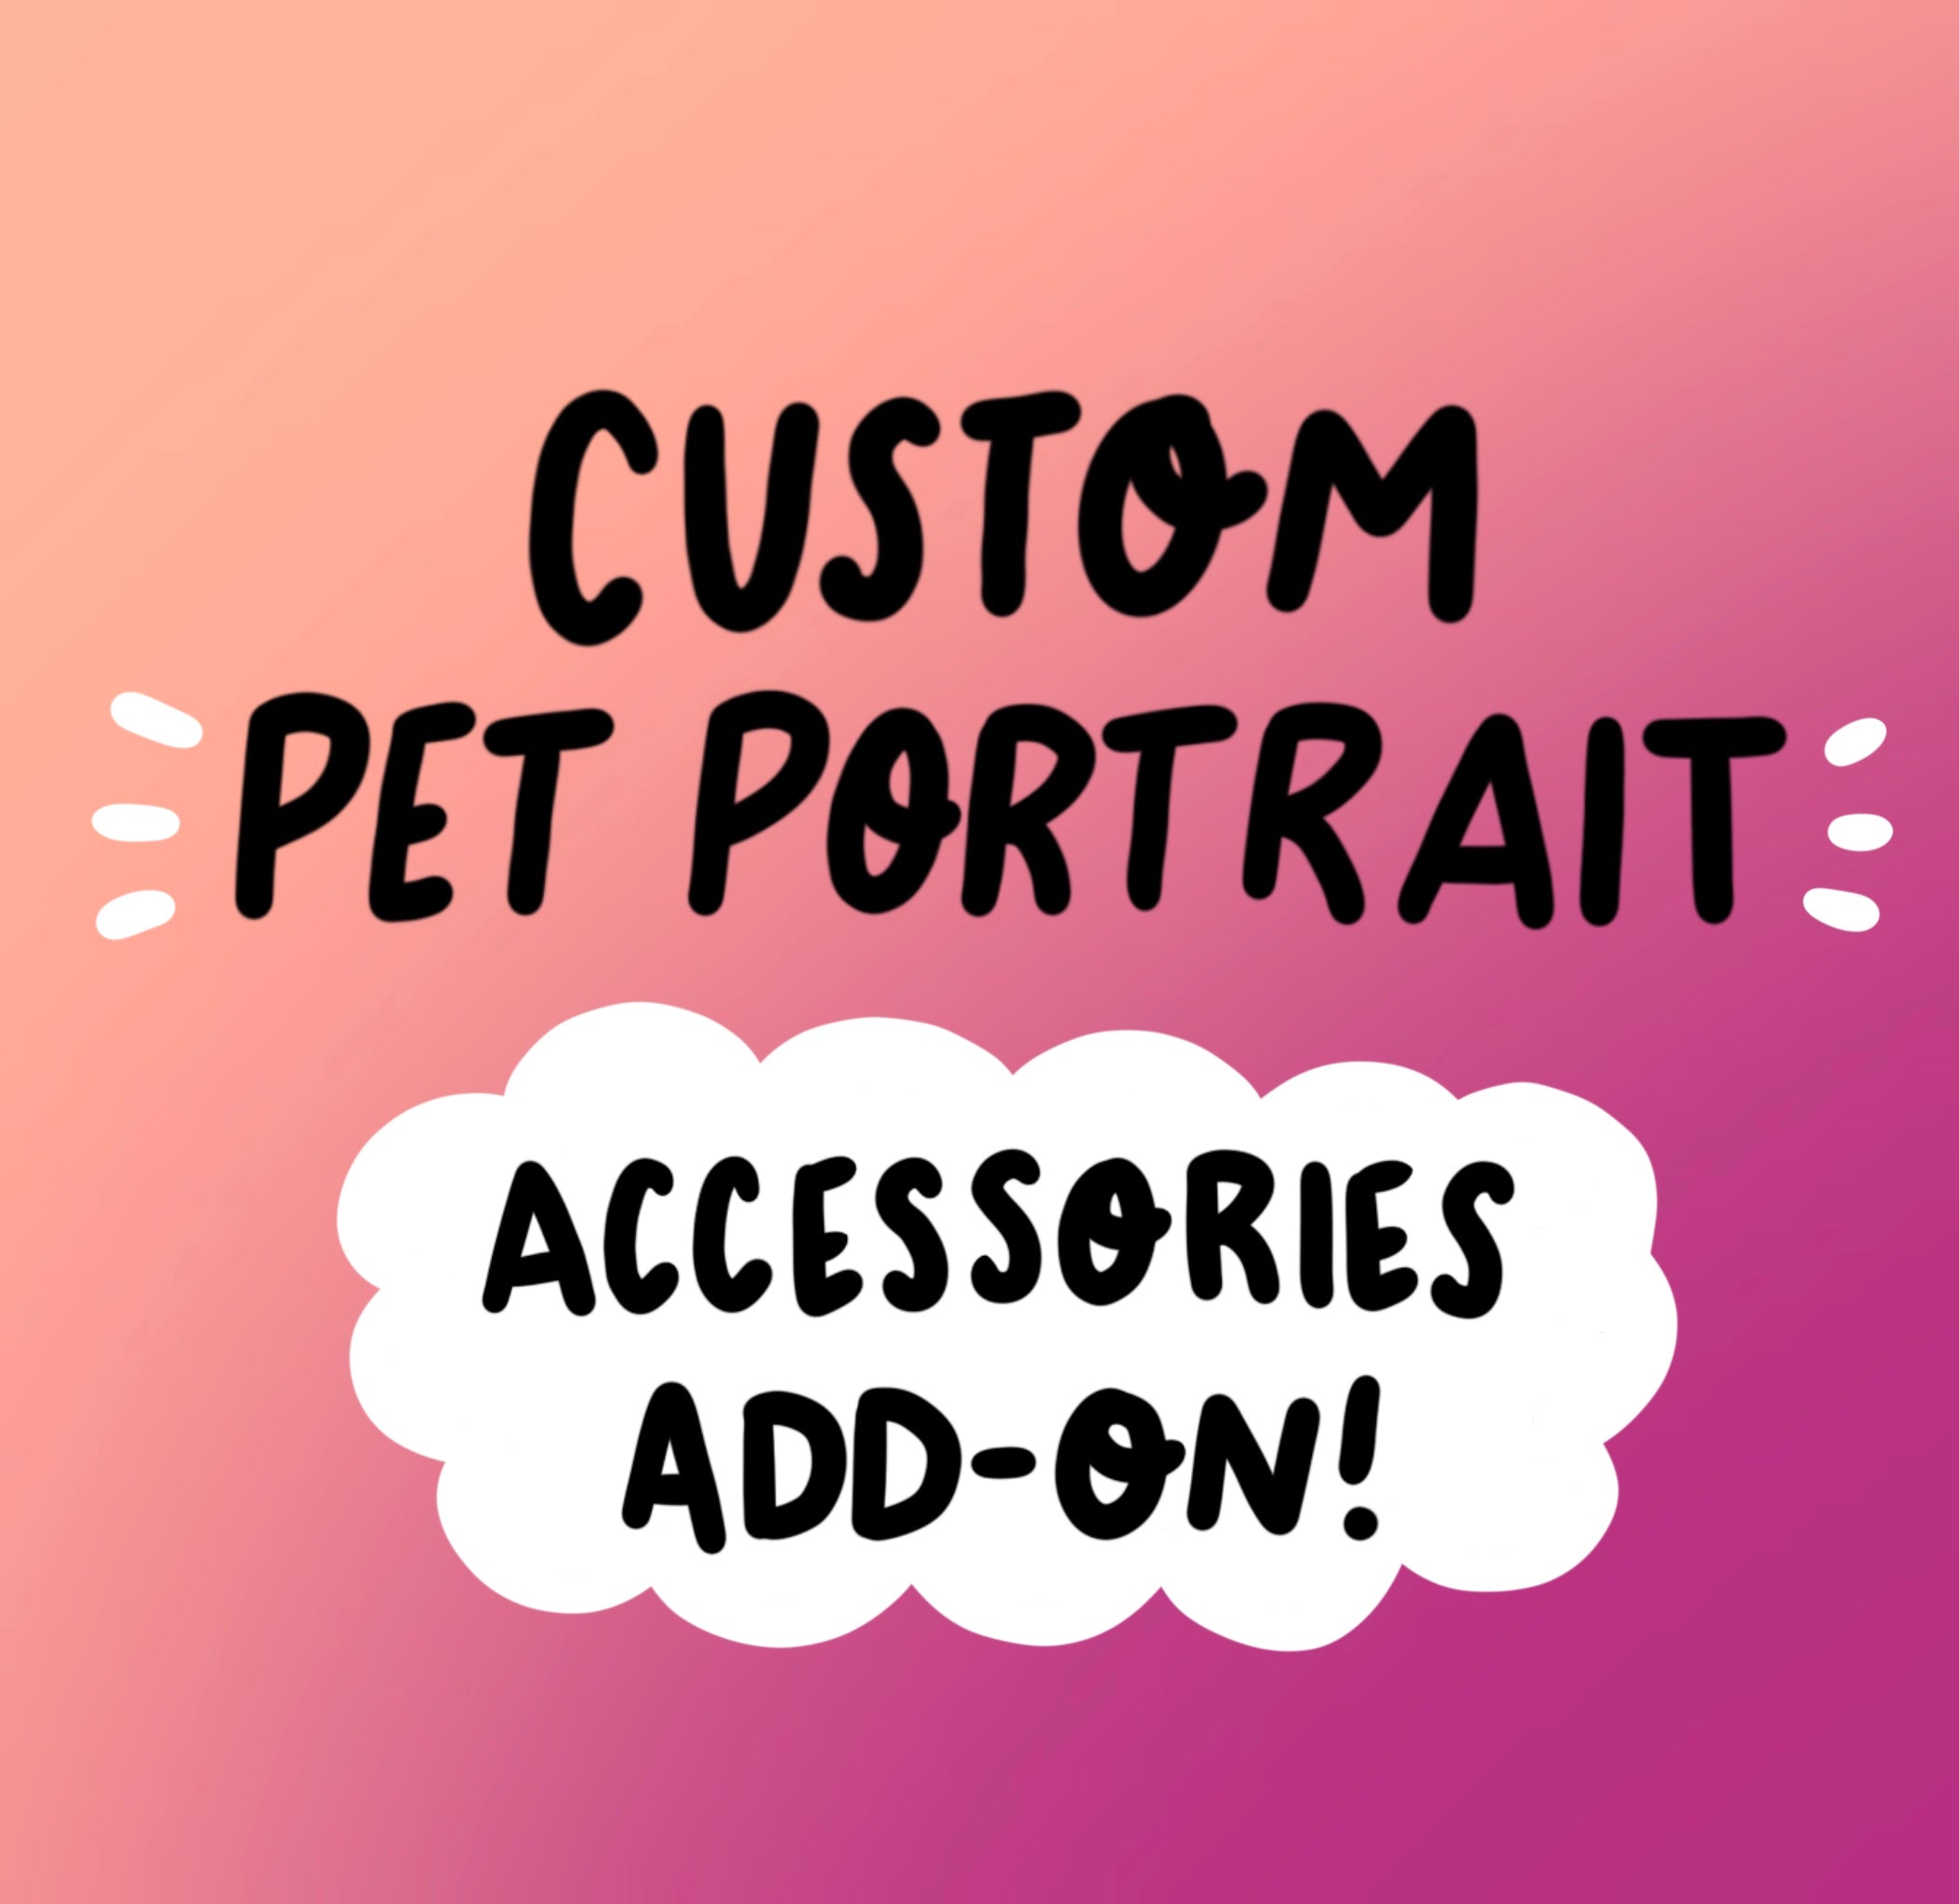 Custom Pet Portrait - Accessories ADD ON